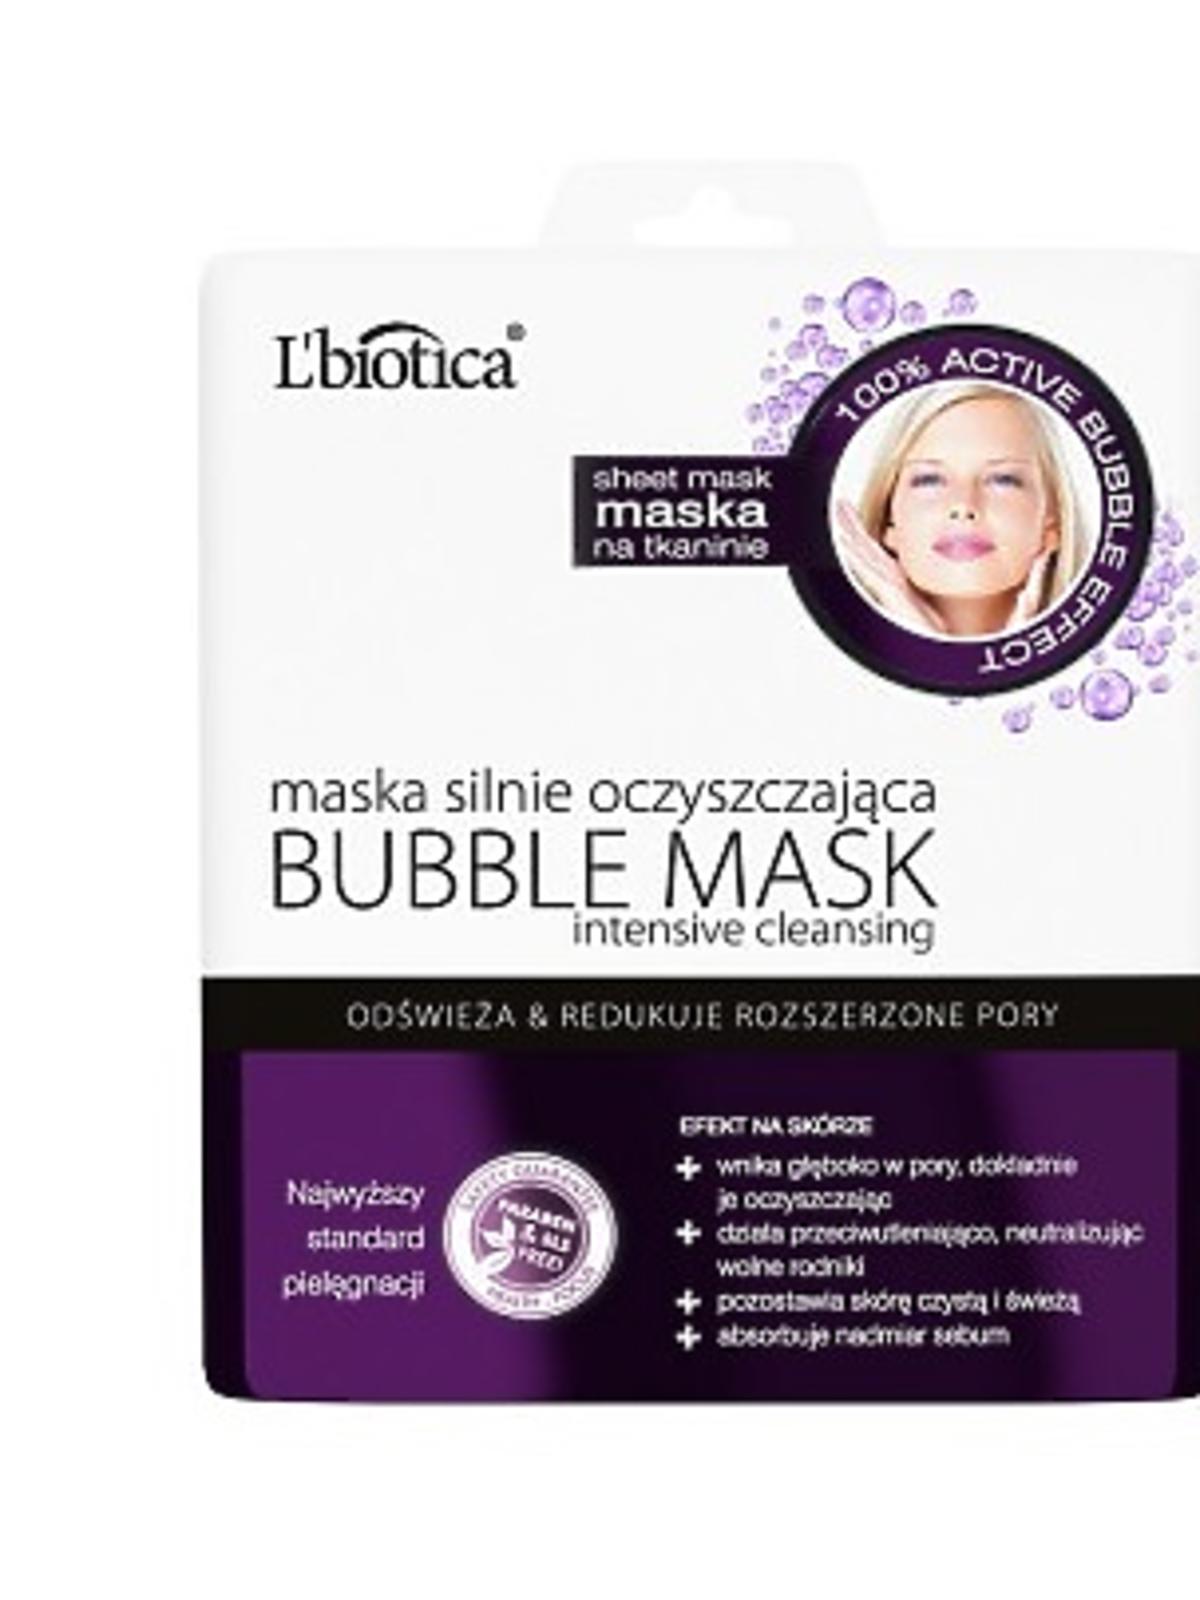 L’biotica, Bubble Mask Intensive Cleansing